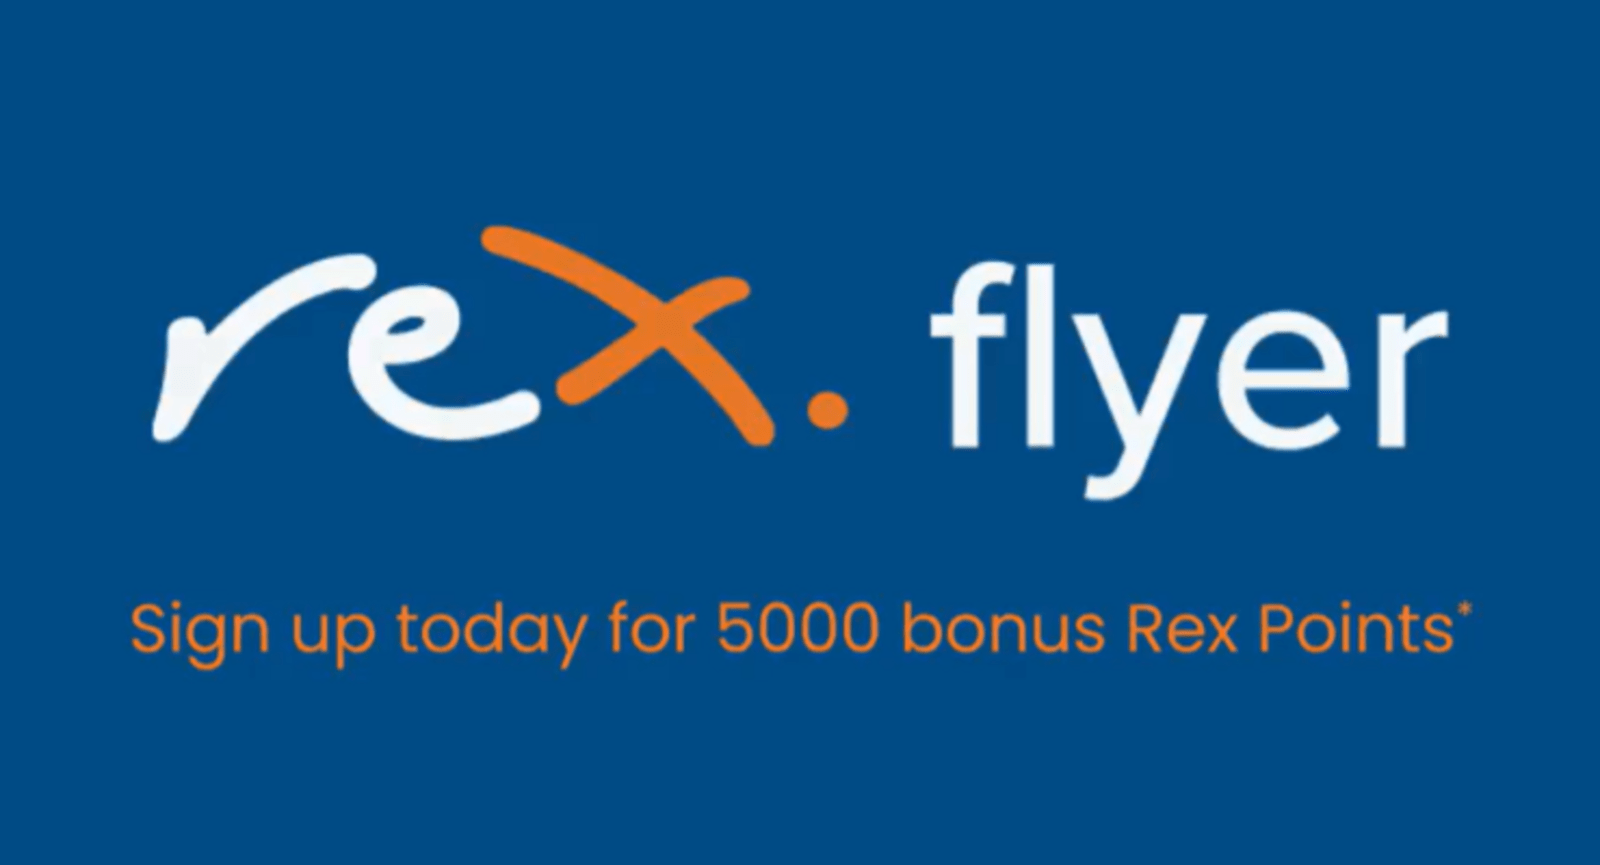 Rex flyer. Sing up today for 5000 bonus Rex points*